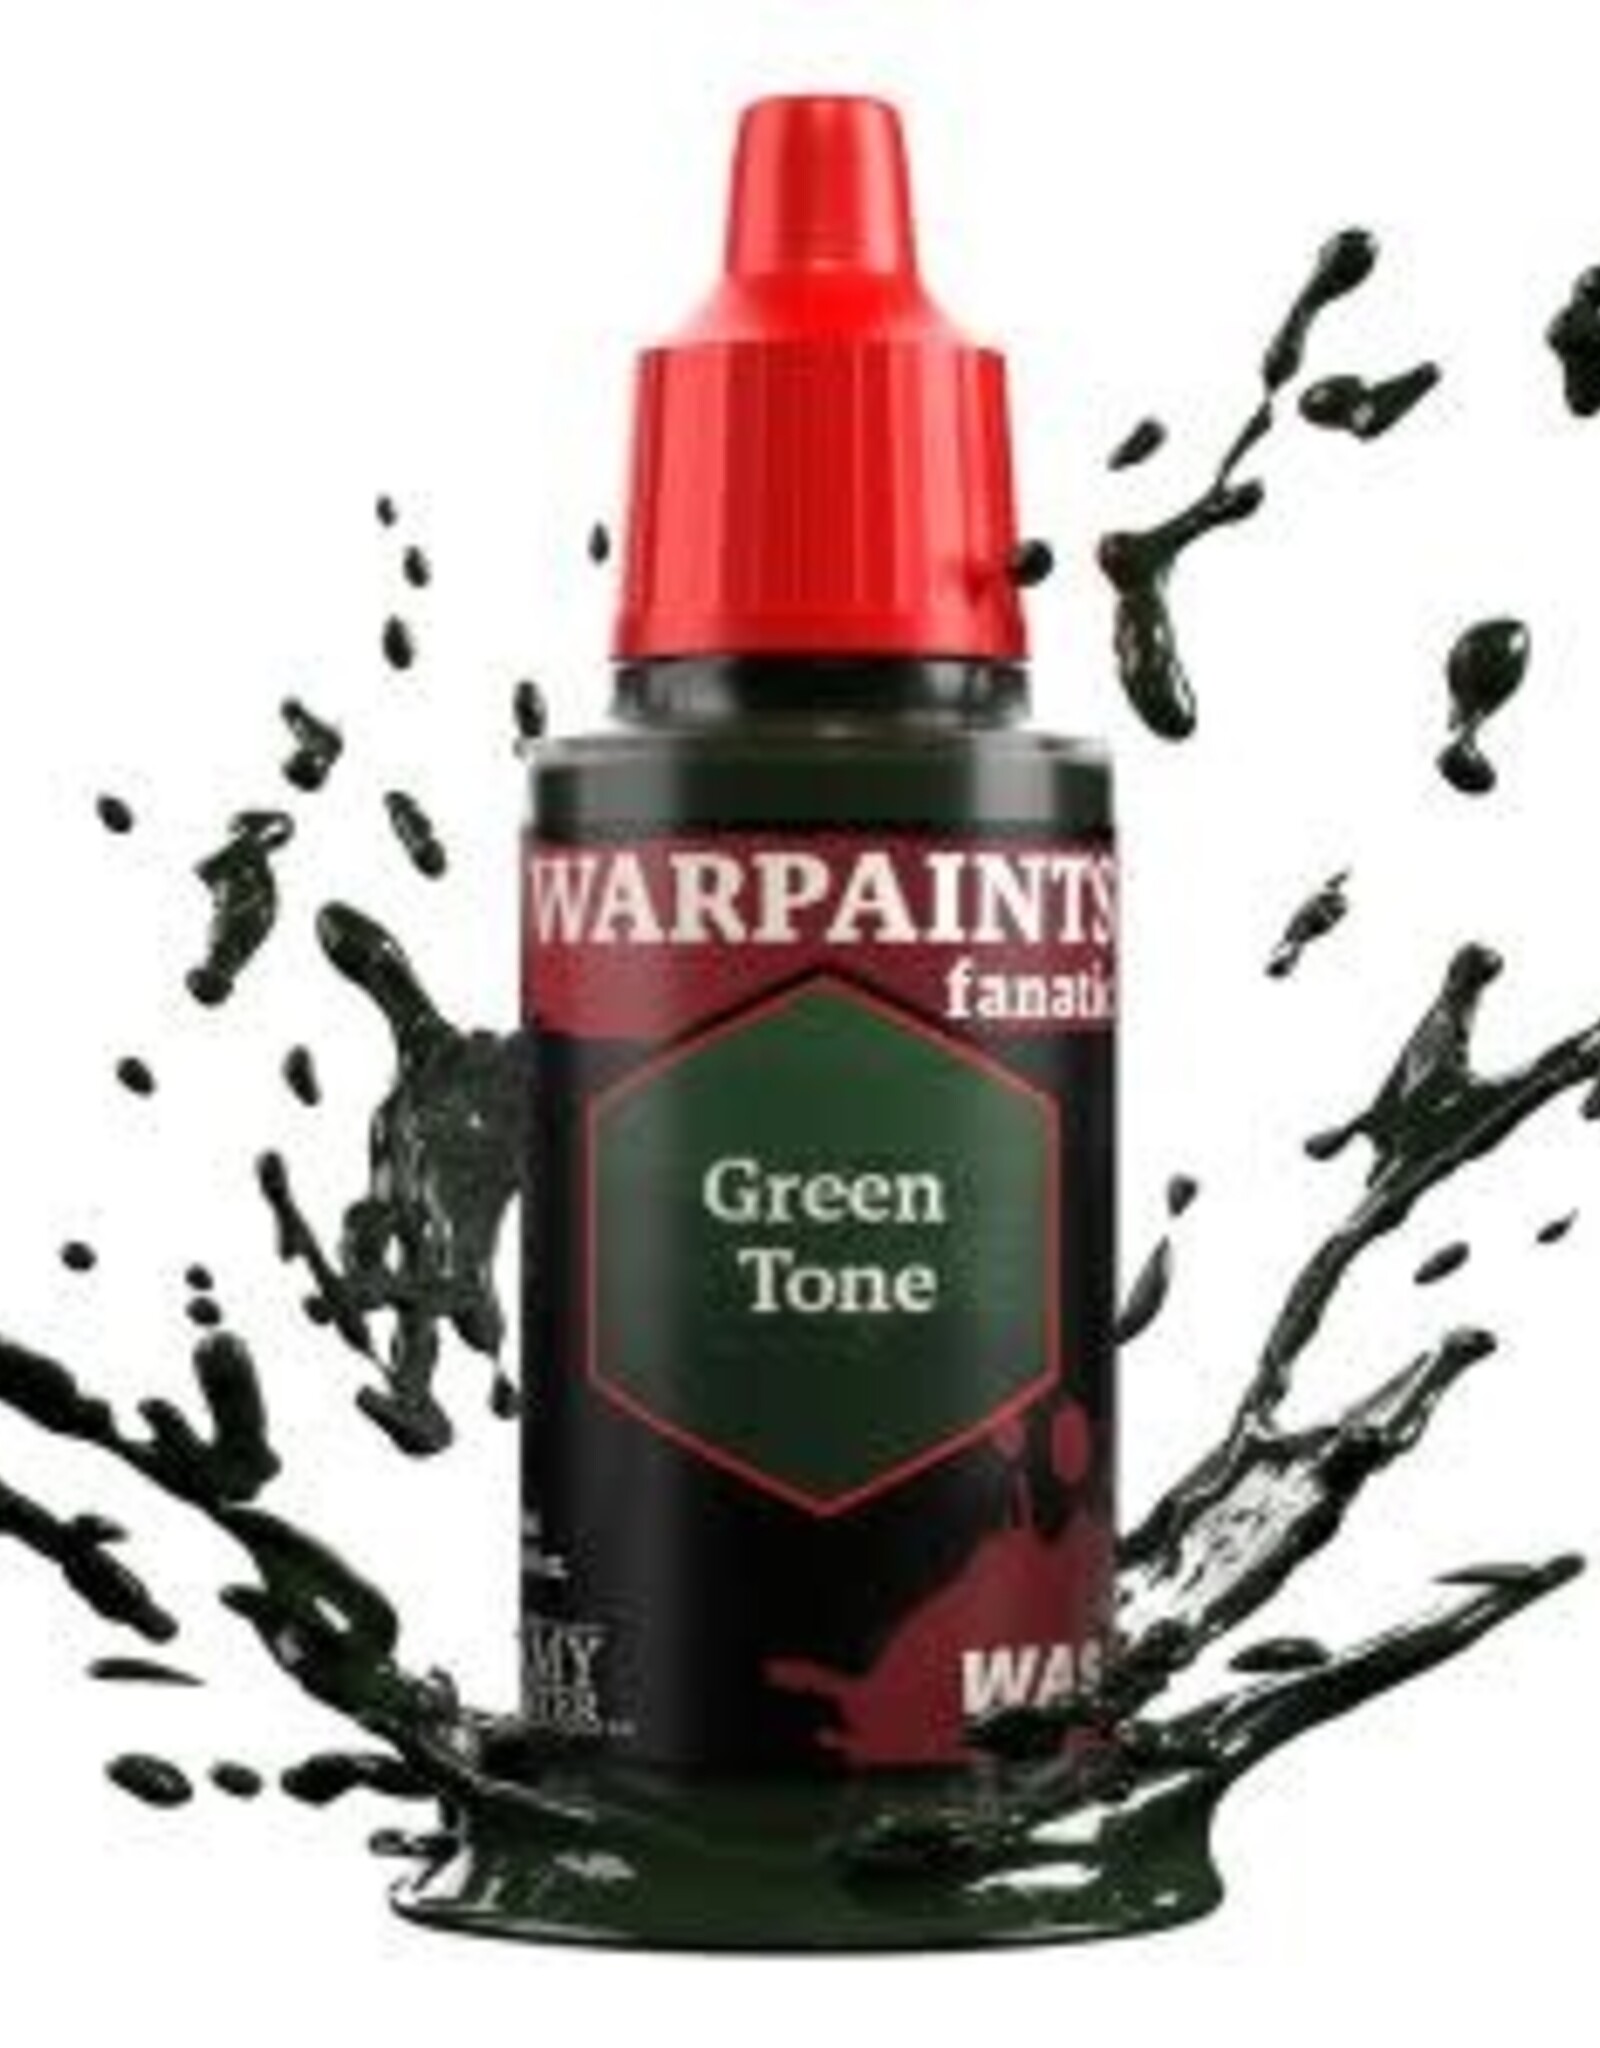 Warpaints Fanatic Wash: Green Tone